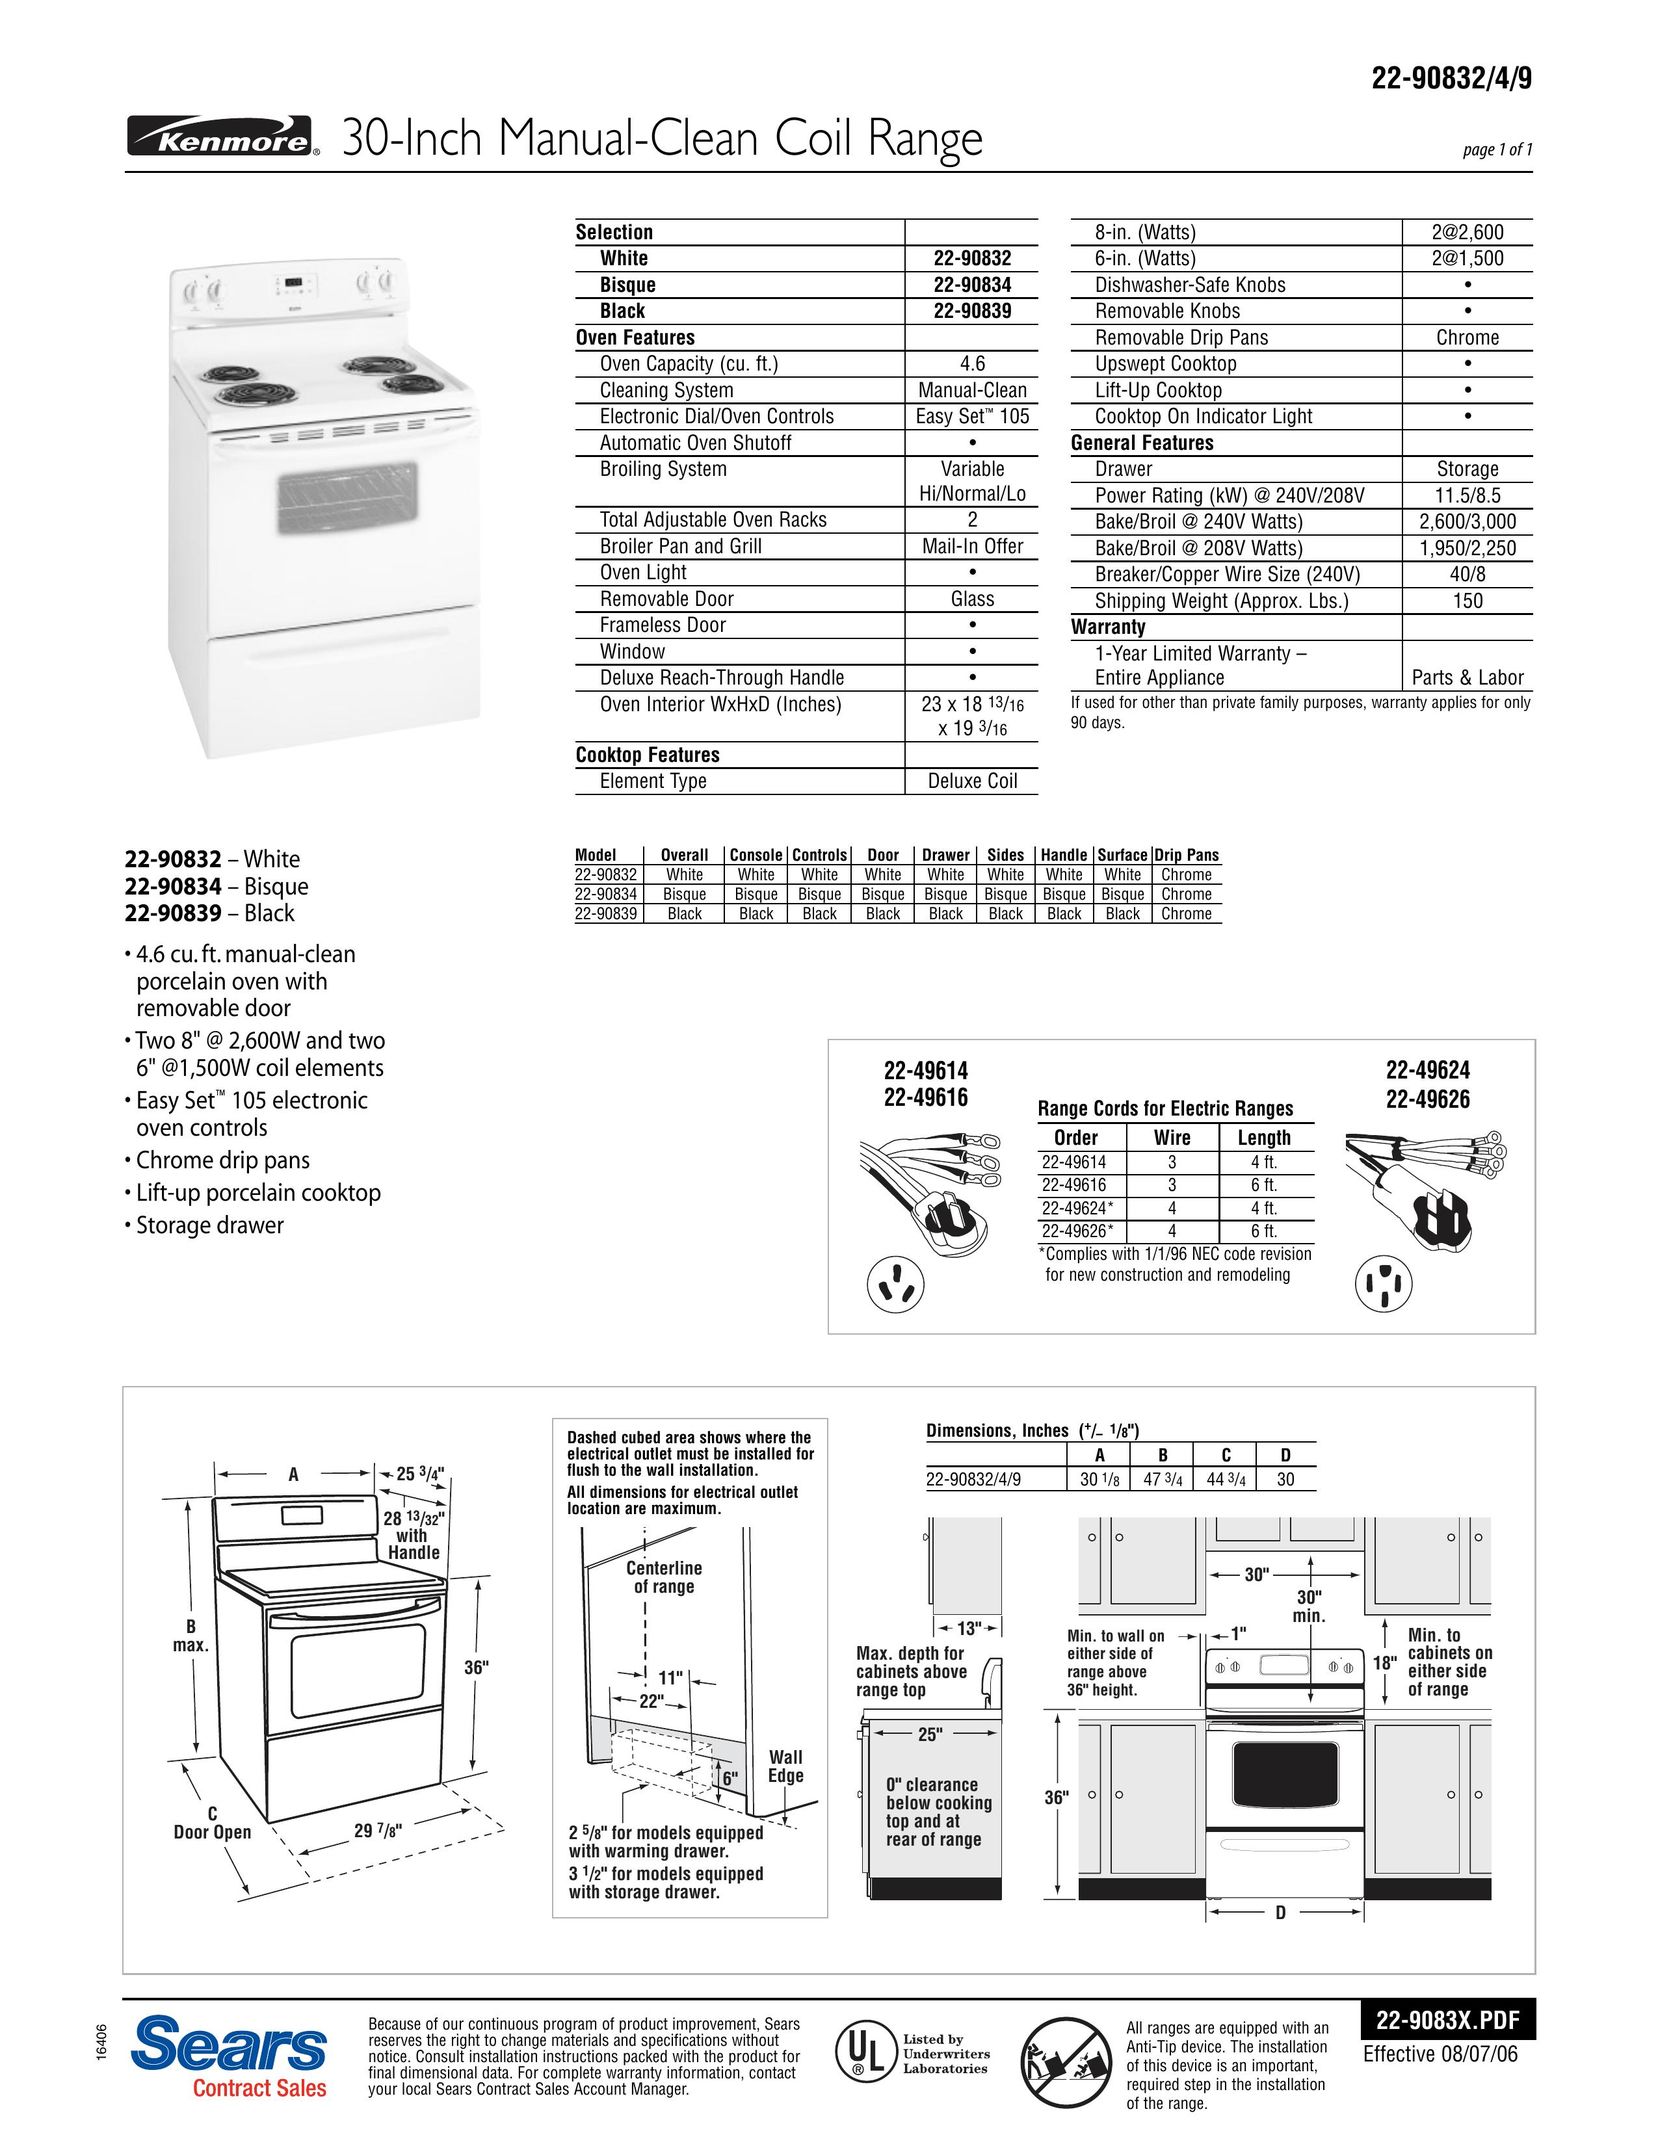 Sears 22-90839 Range User Manual